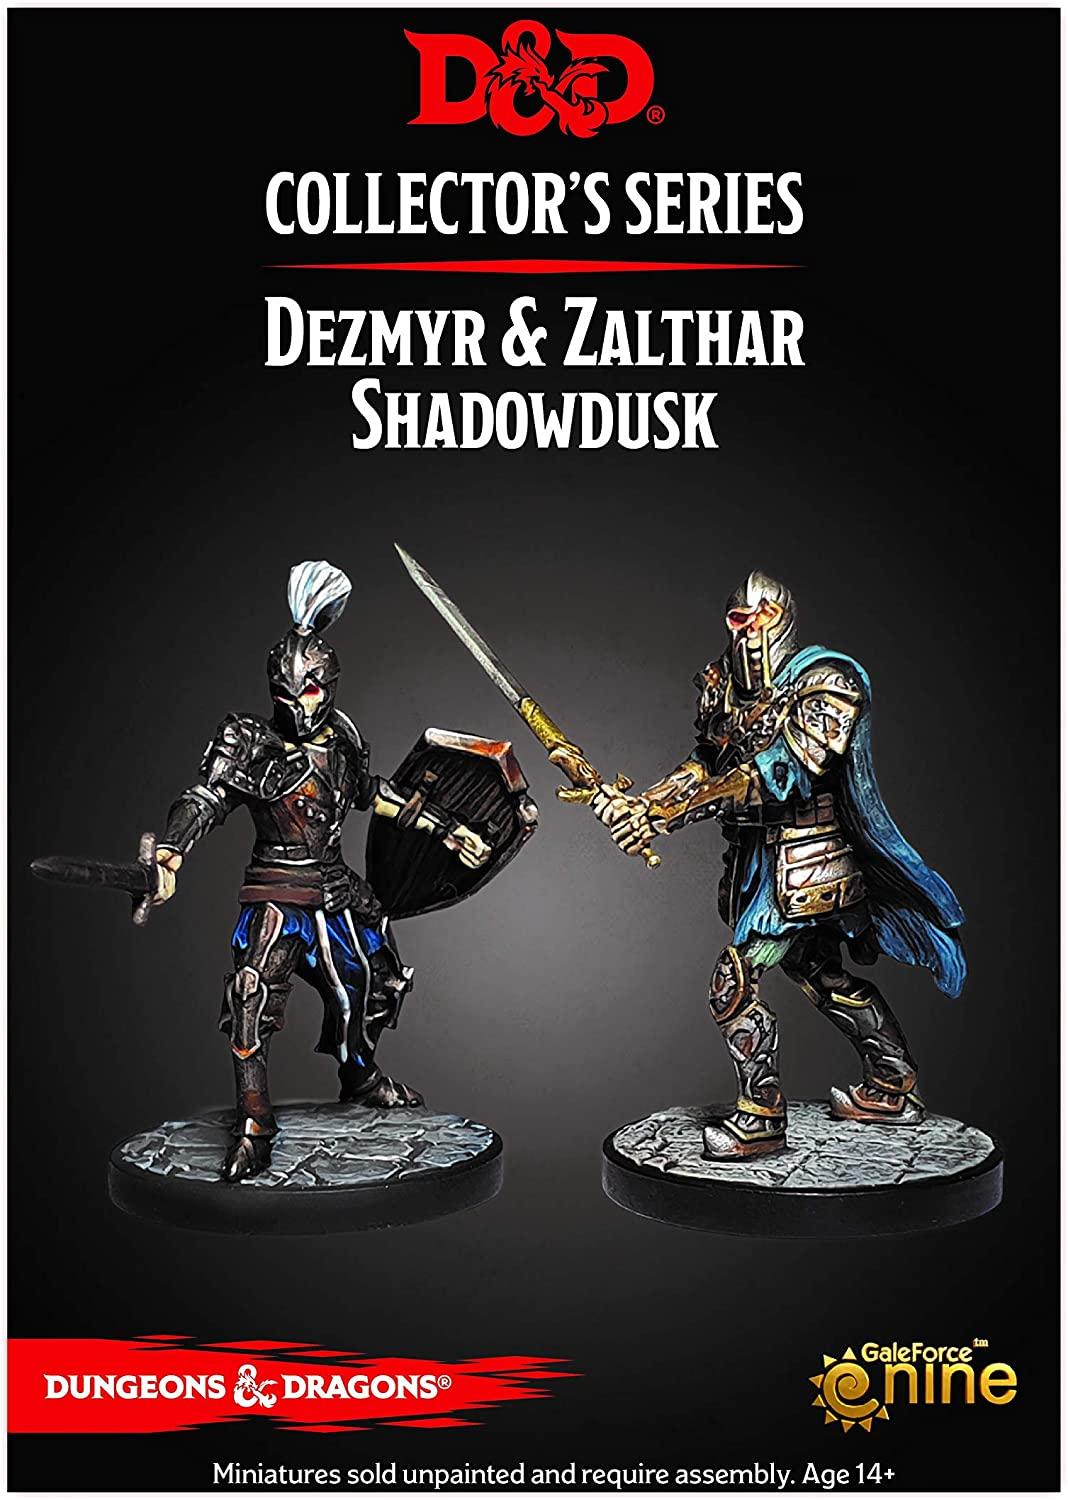 D&D - Dezmyr & Zalthar Shadowdusk: Collector' Series